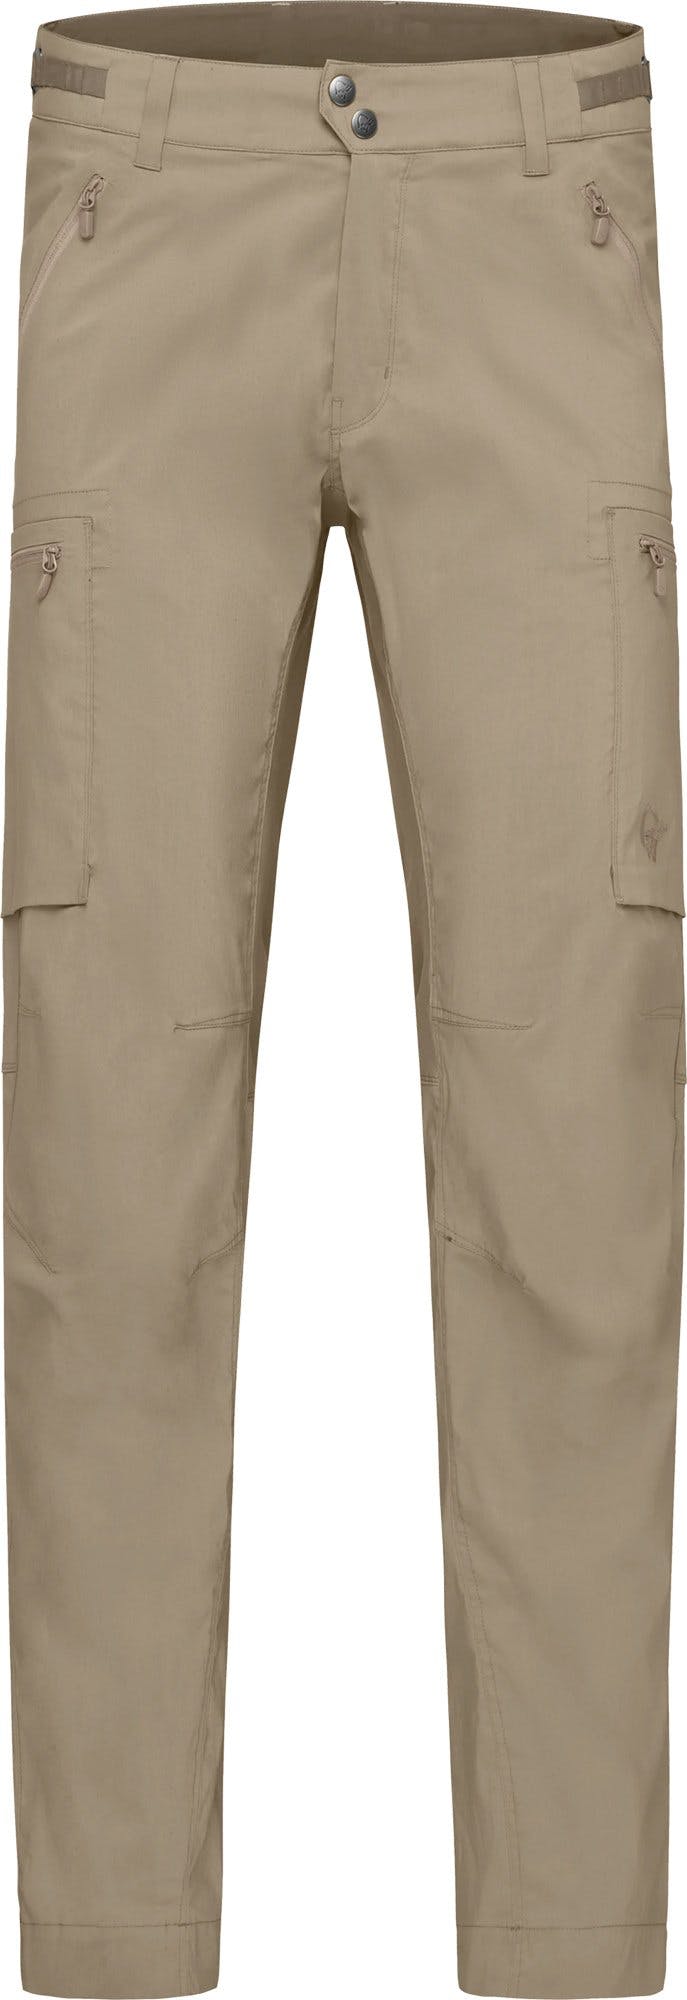 Product image for Femund Light Cotton Pant - Men's